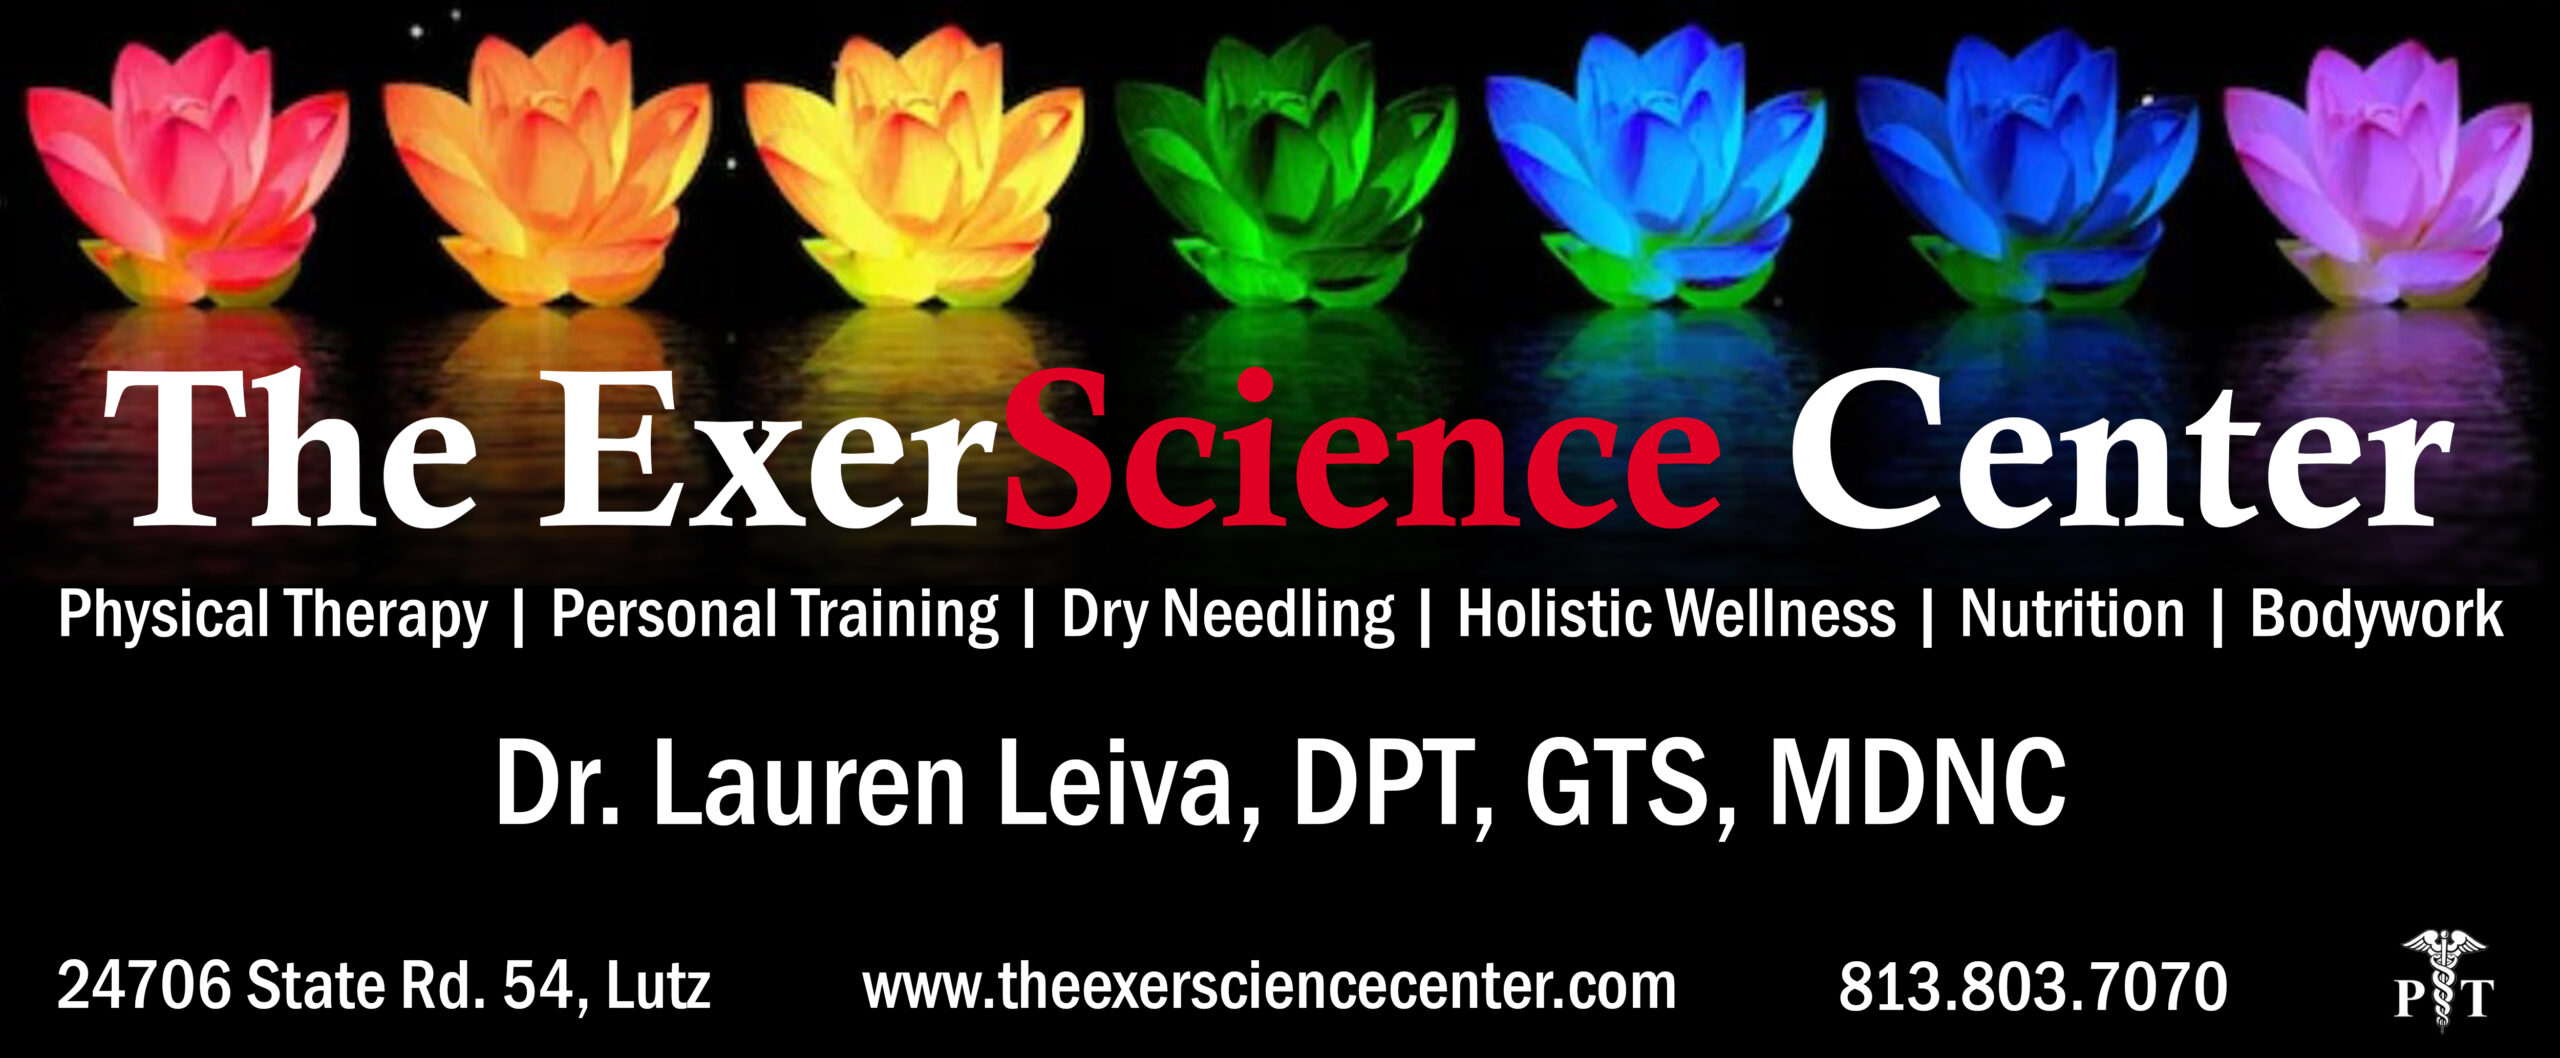 The Exerscience Center – Dr. Lauren Leiva, DPT